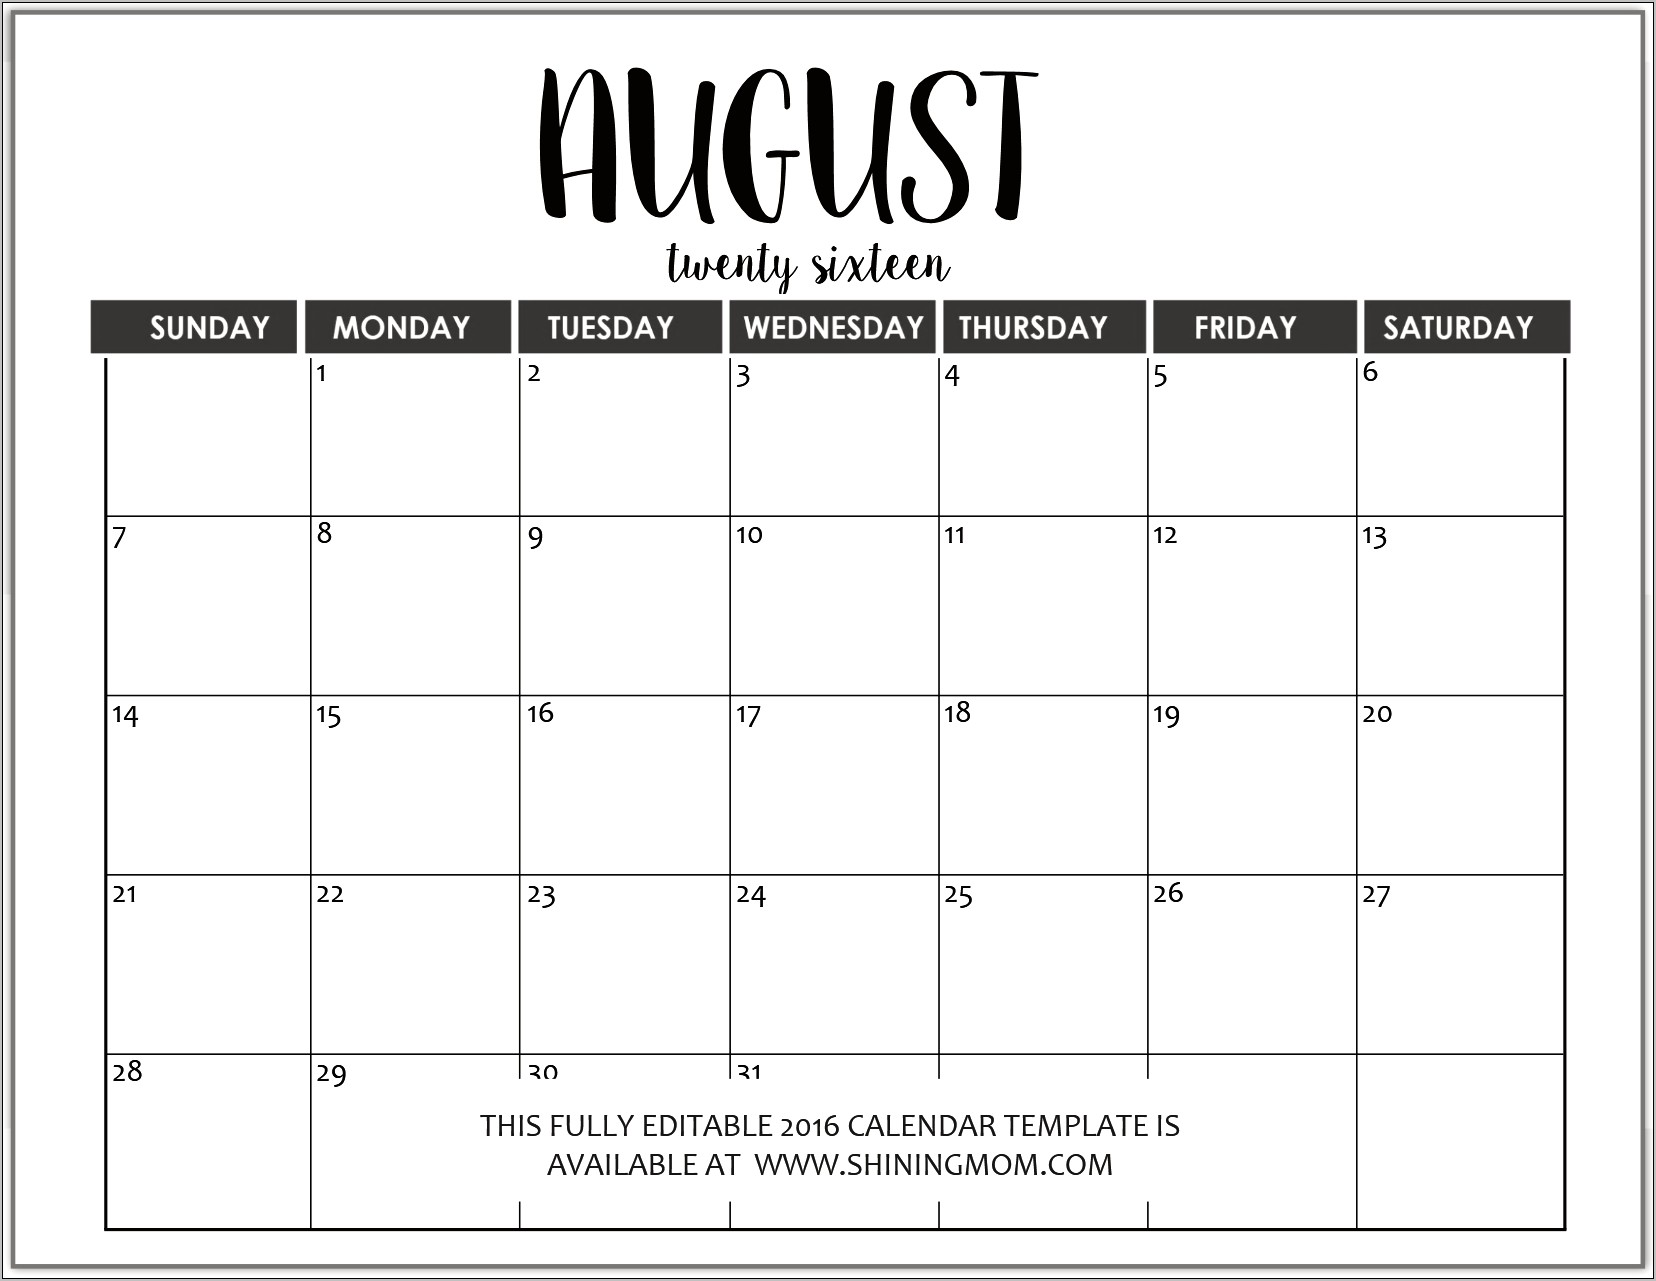 Free Microsoft Word Calendar Template 2016 Resume Example Gallery